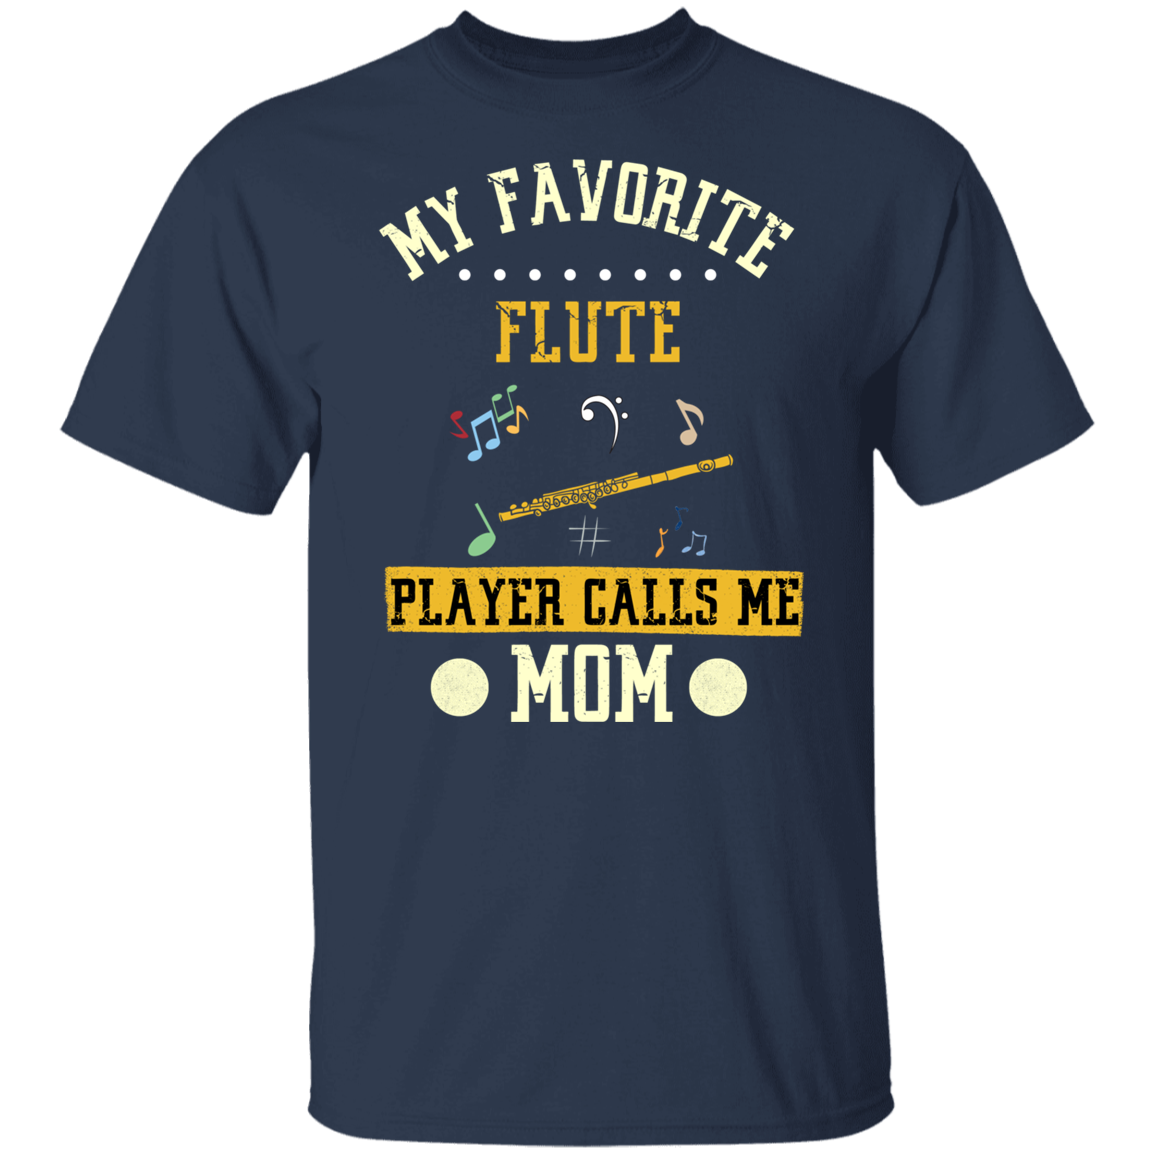 Favorite Flute T-Shirt